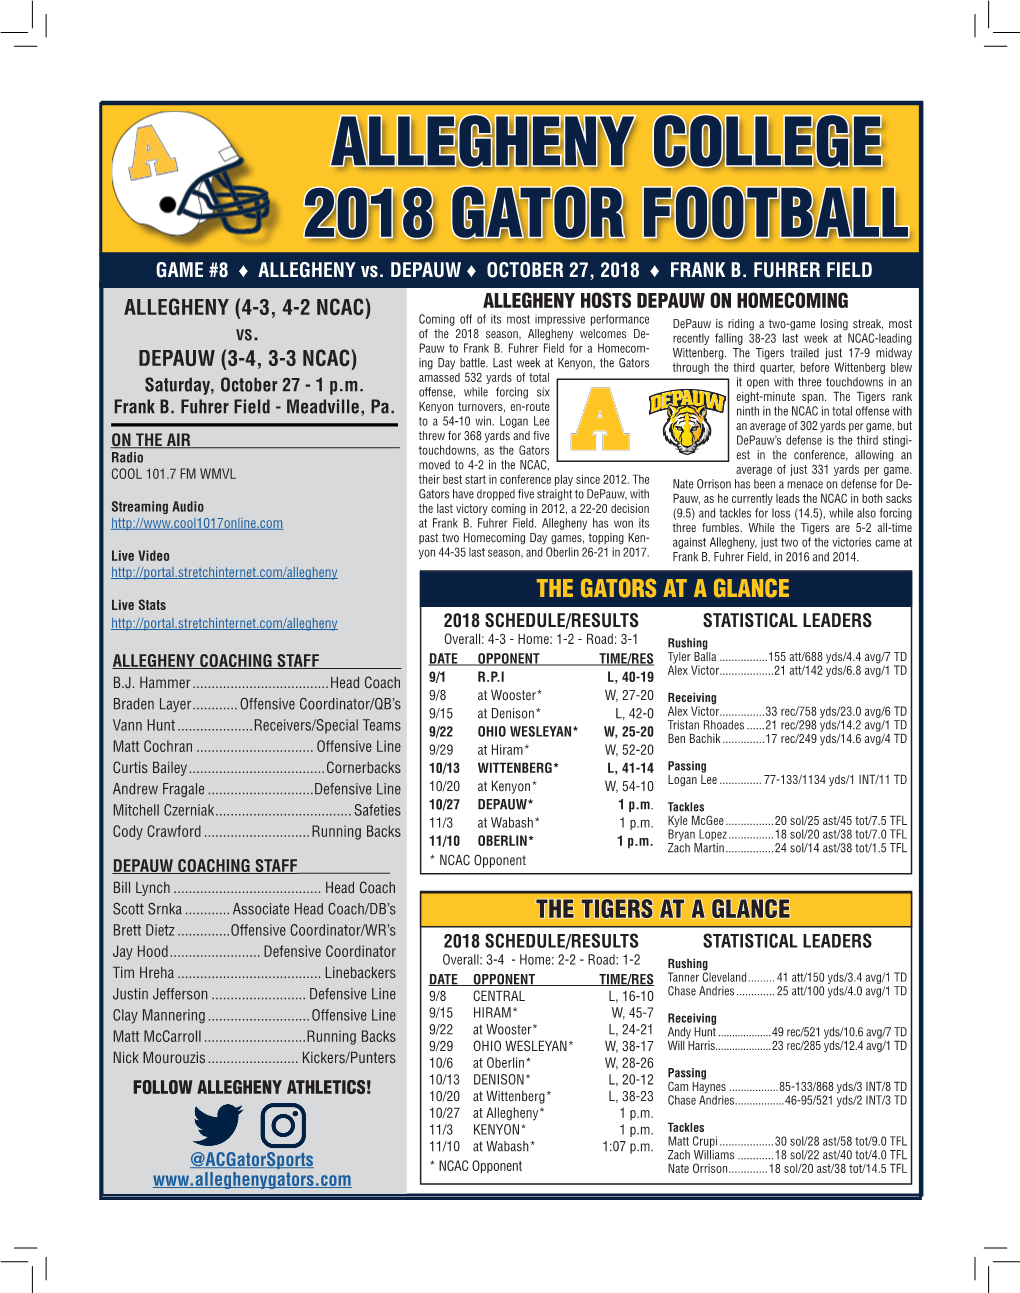 2018 Gator Football Allegheny College